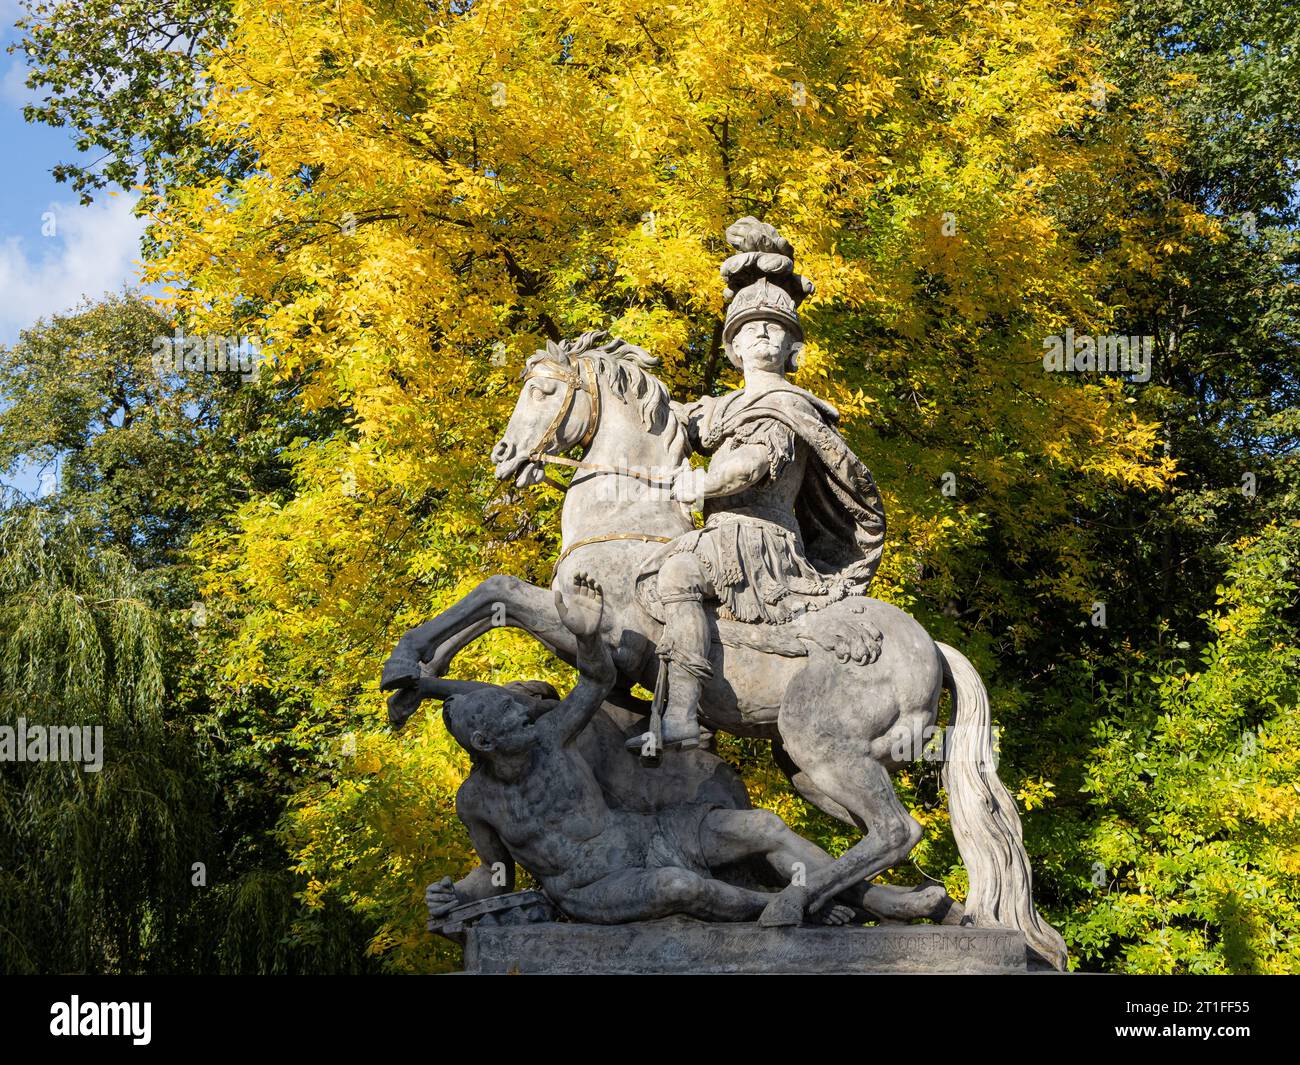 Monument to Polish King John the Third Sobieski Triumphant in the Battle of Vienna in 1683. Tourist, Folder Photography. Autumn, nice weather. Stock Photo